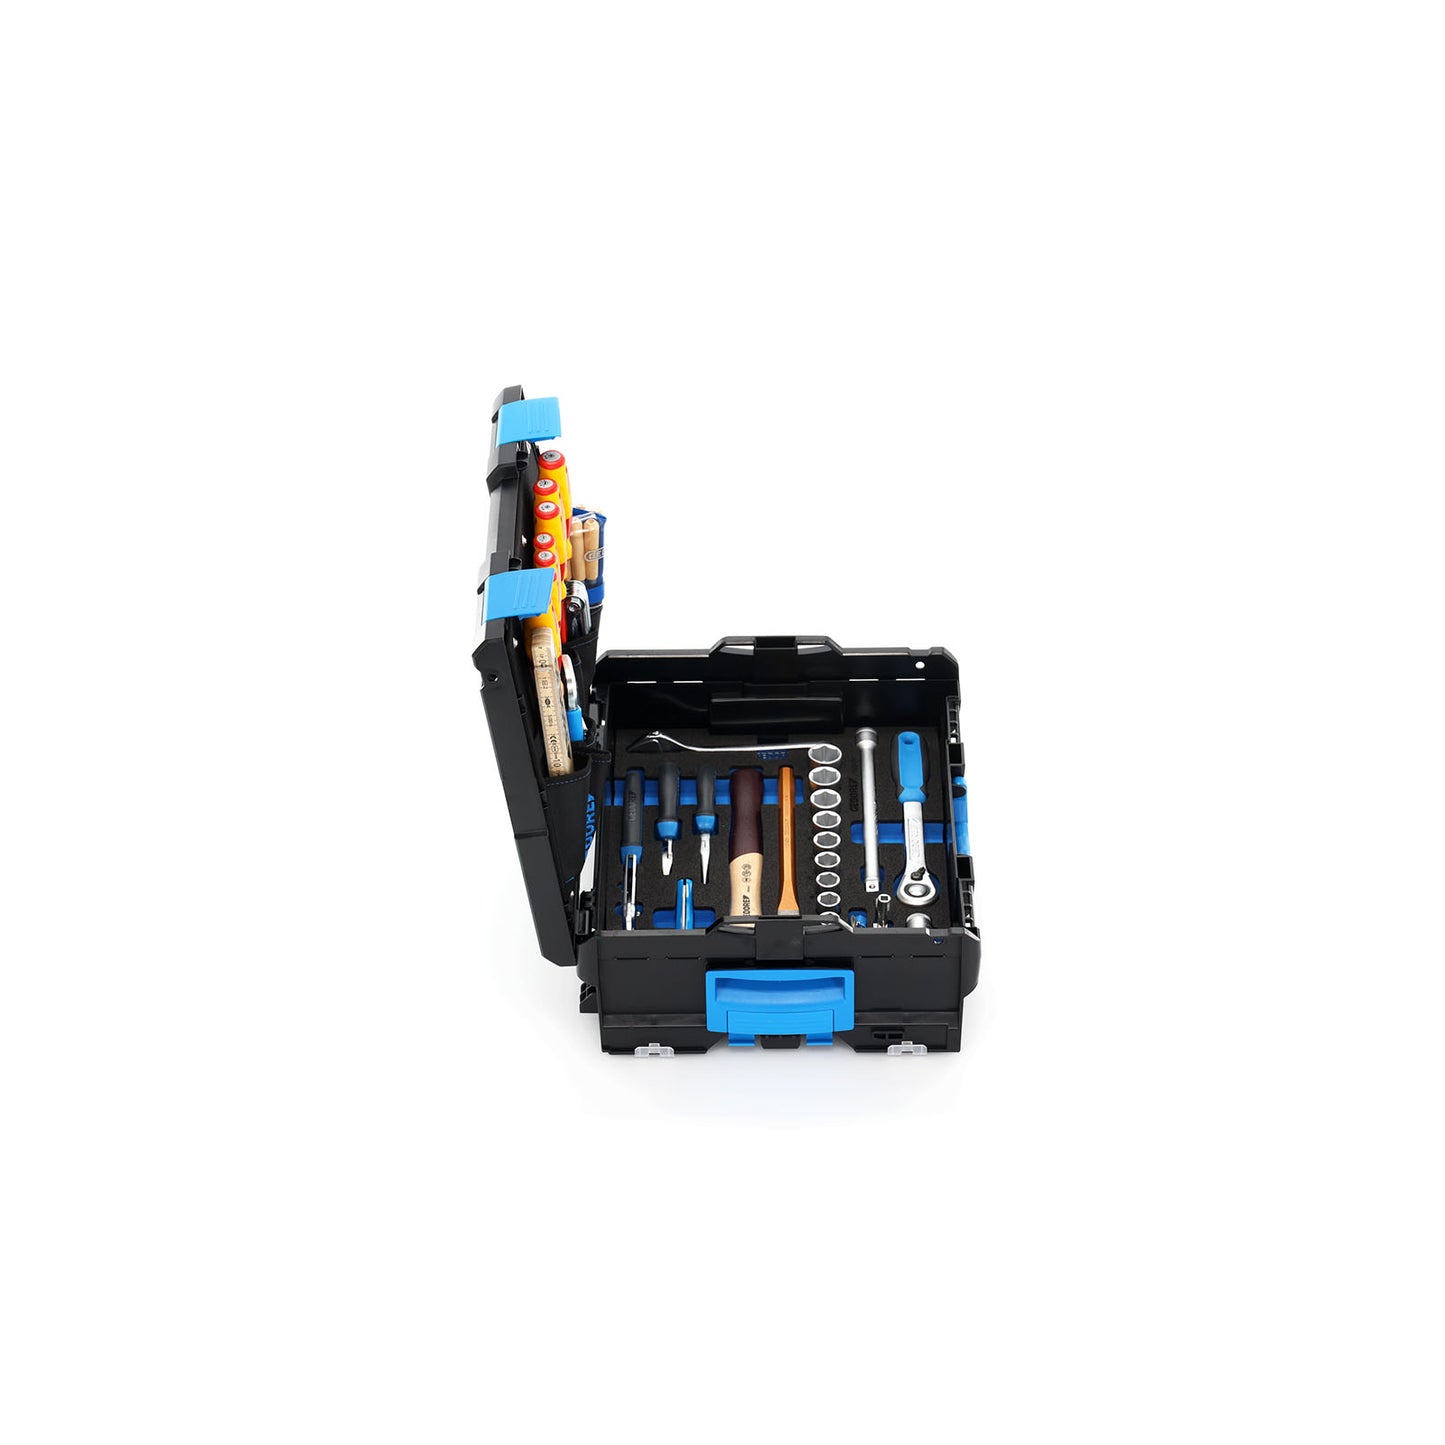 GEDORE 1100-01 - L-Boxx + Assortment of 58 tools (2658194)